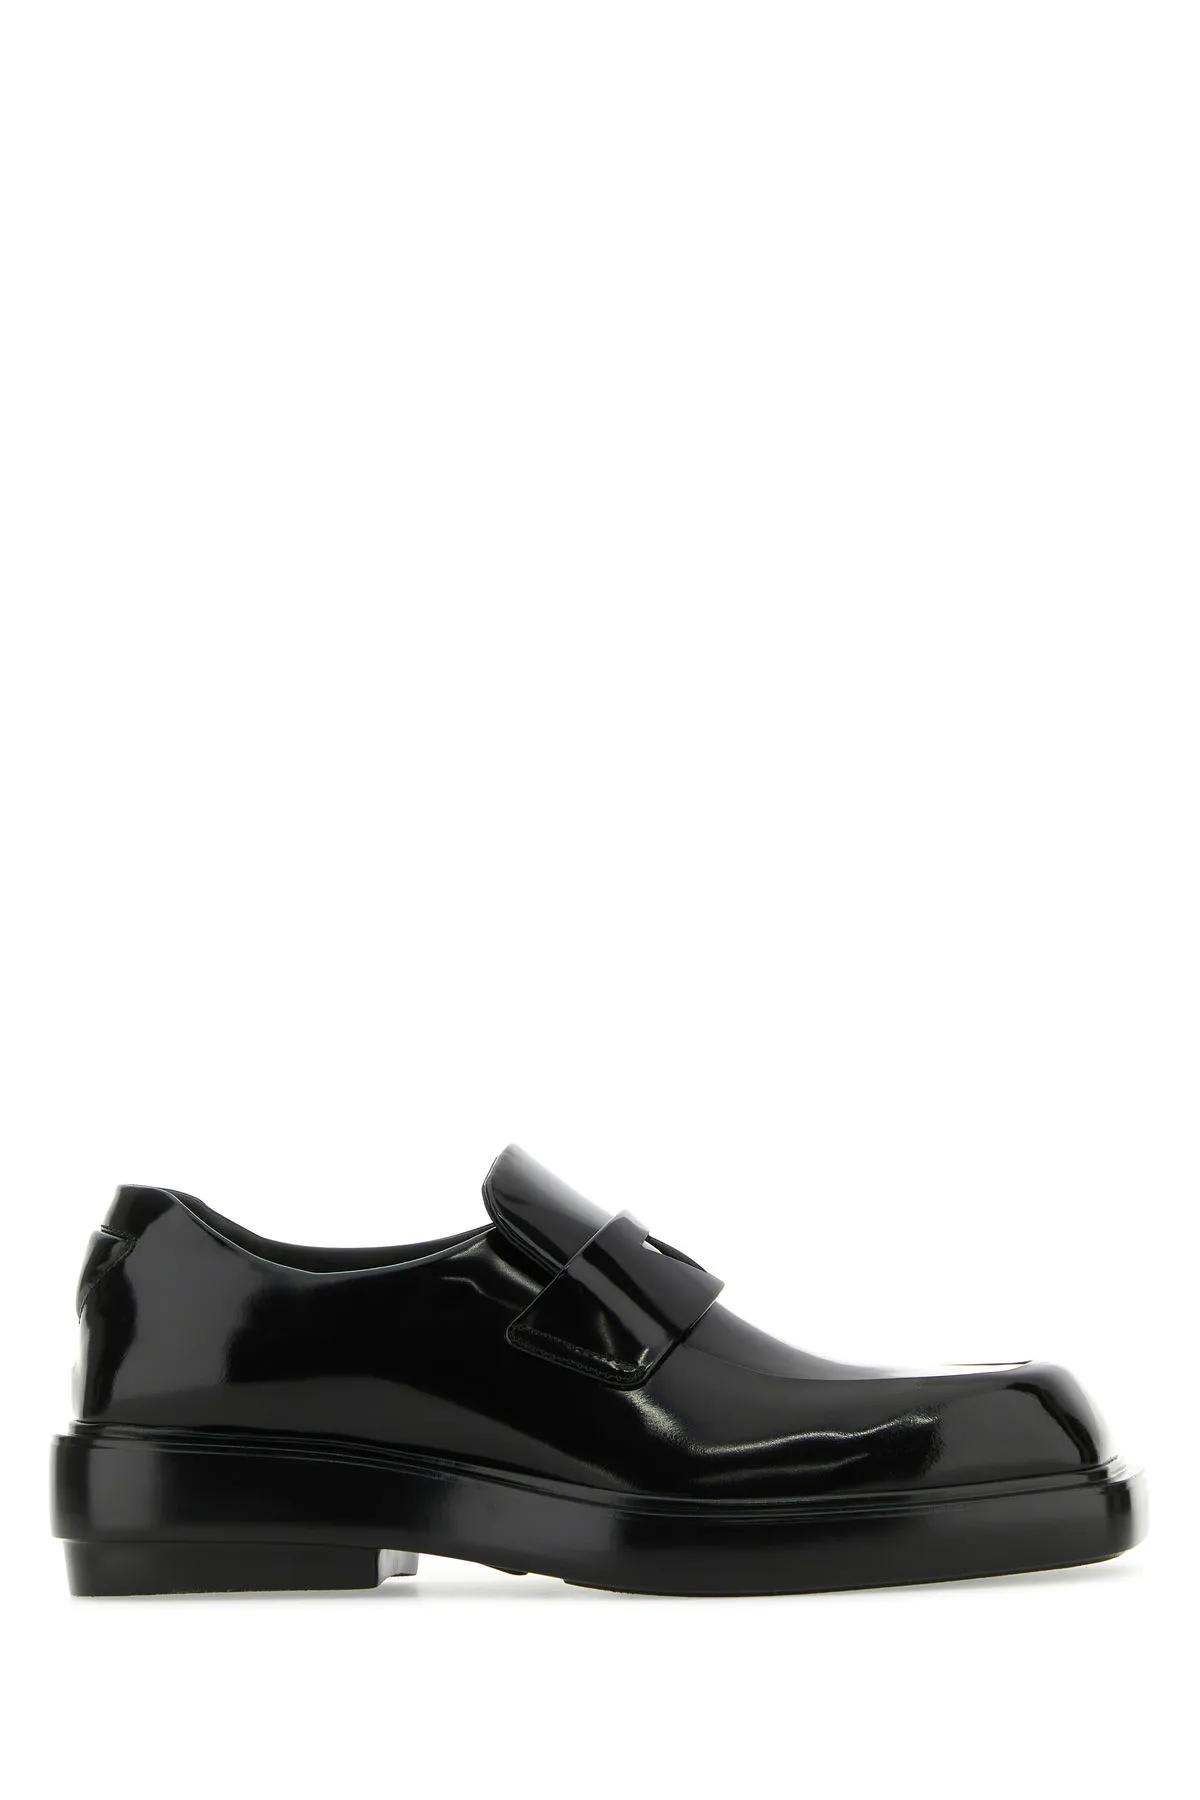 Shop Prada Black Leather Loafers